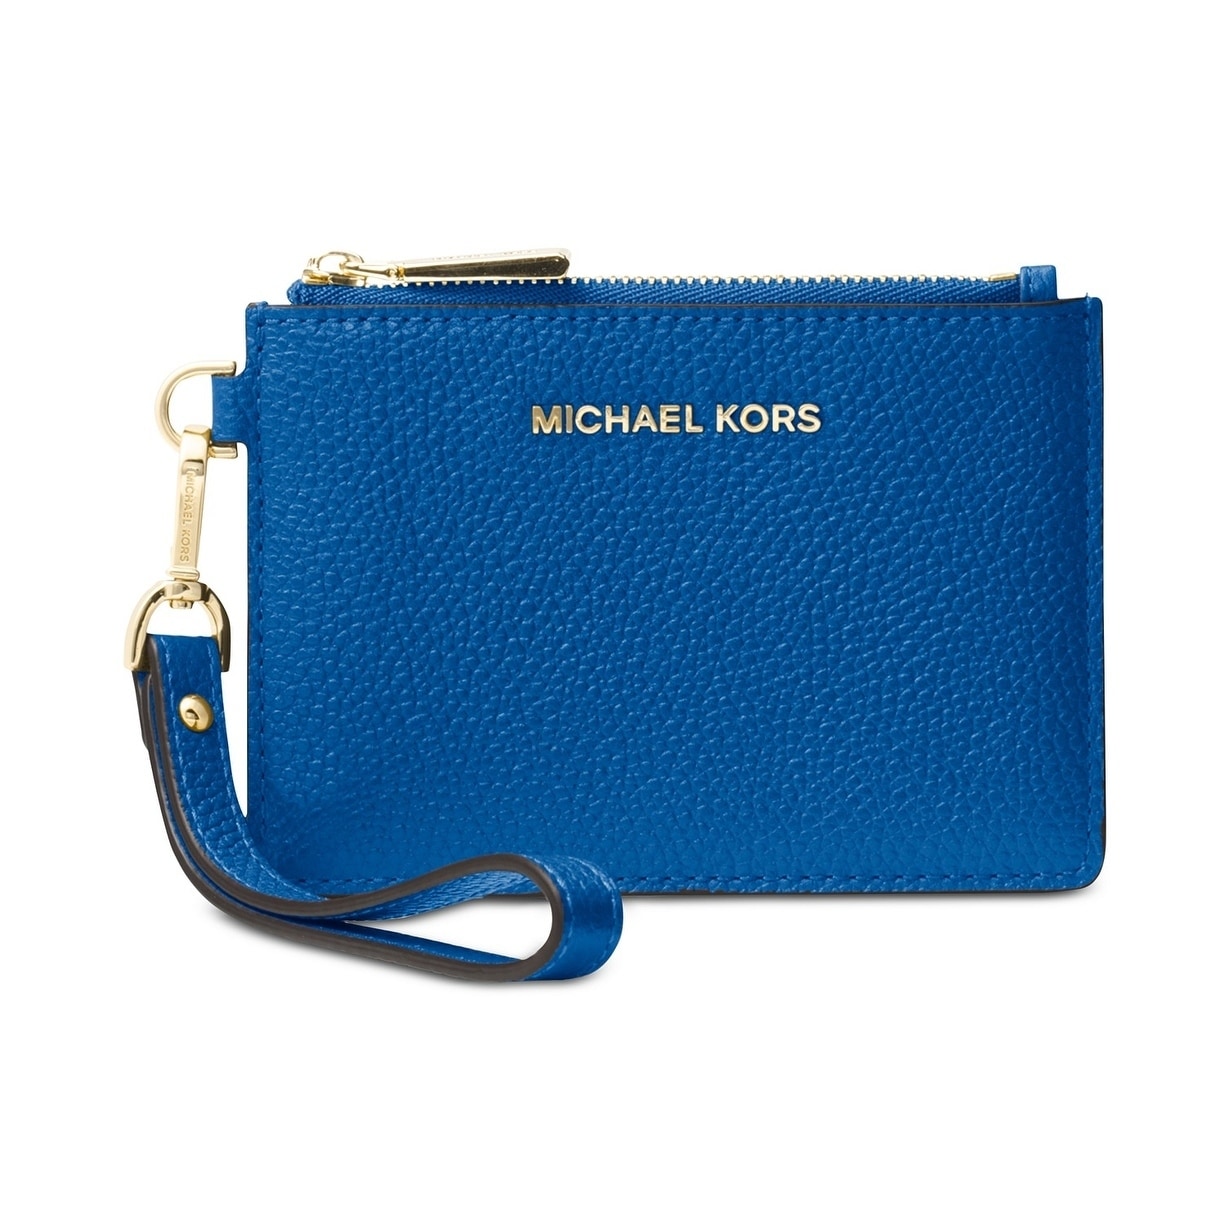 mk royal blue purse